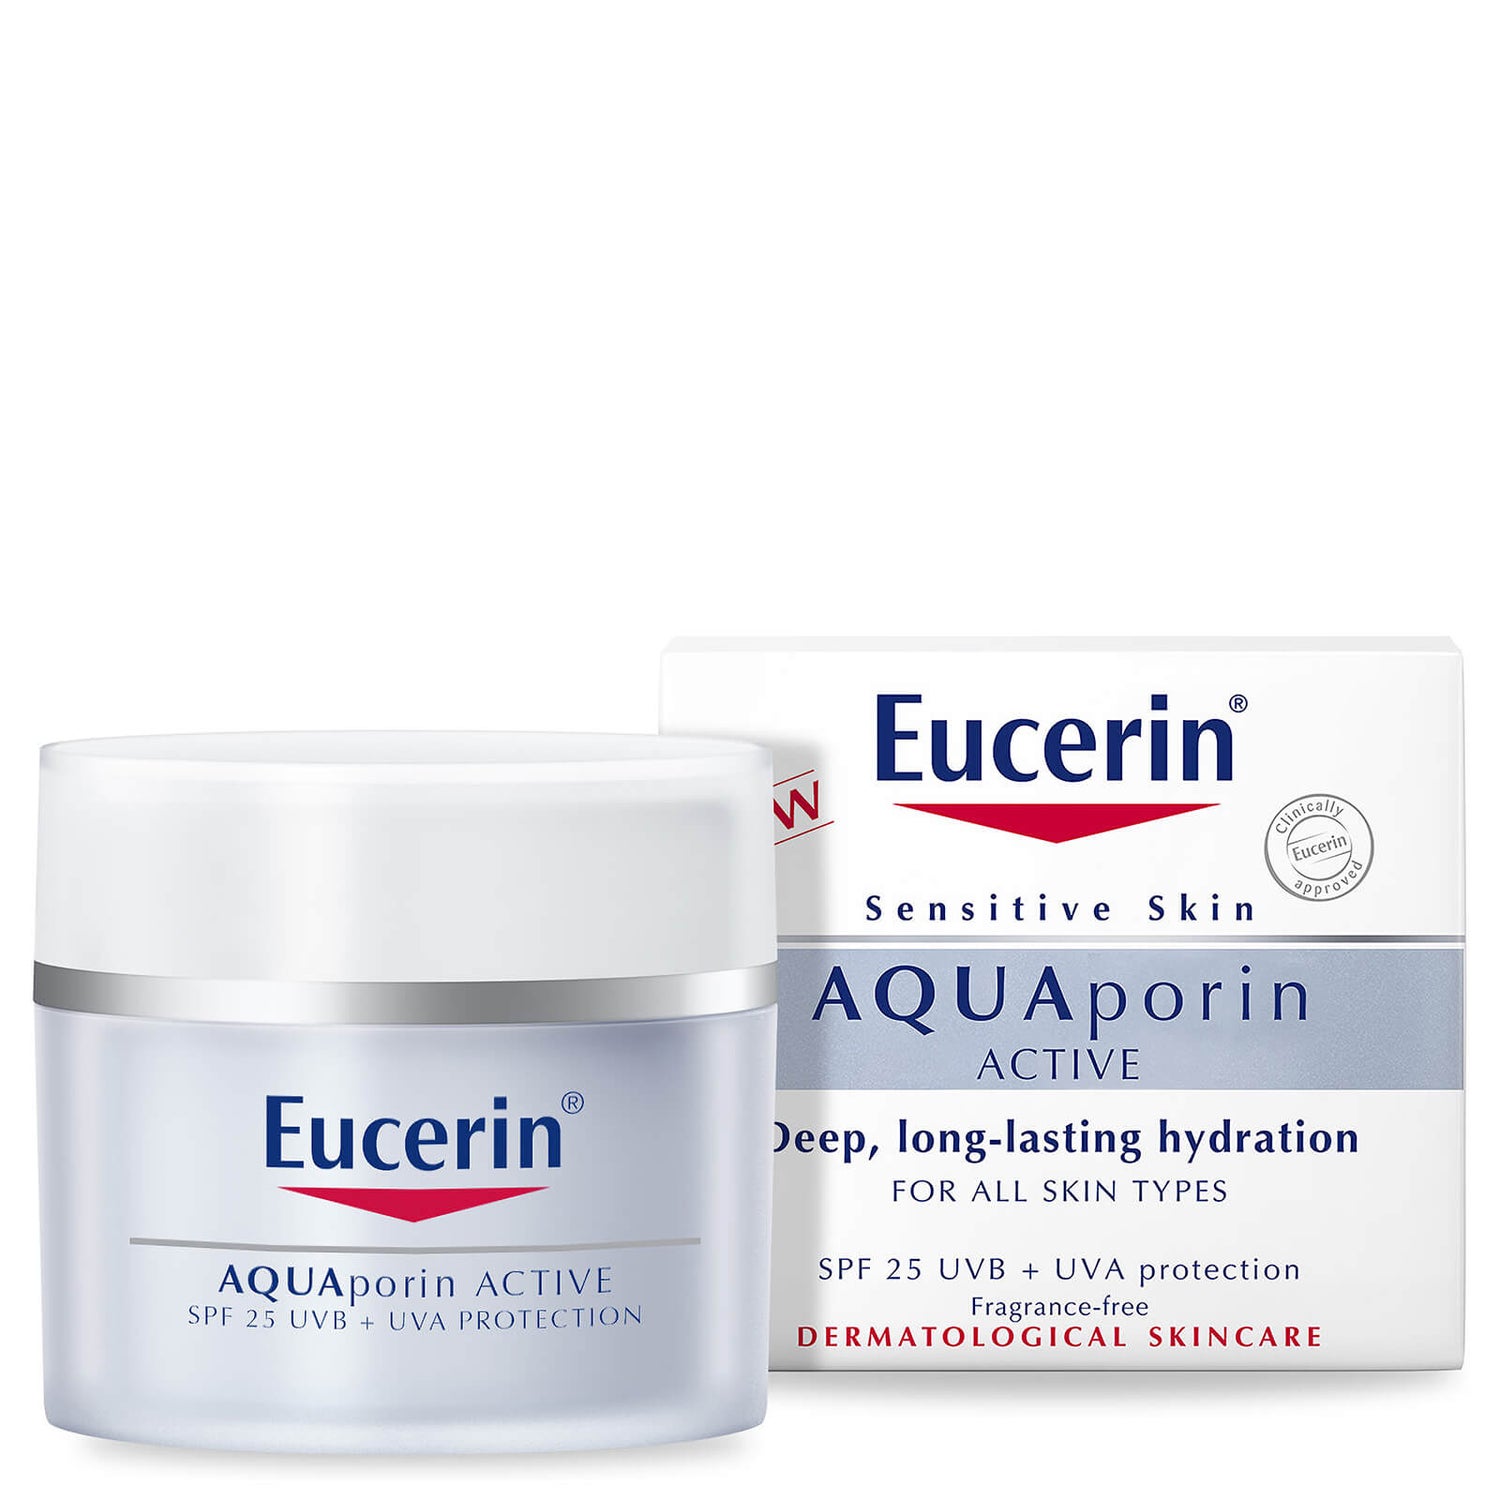 Eucerin® Aquaporin Active SPF 25 Protection UVB + UVA (50ml)